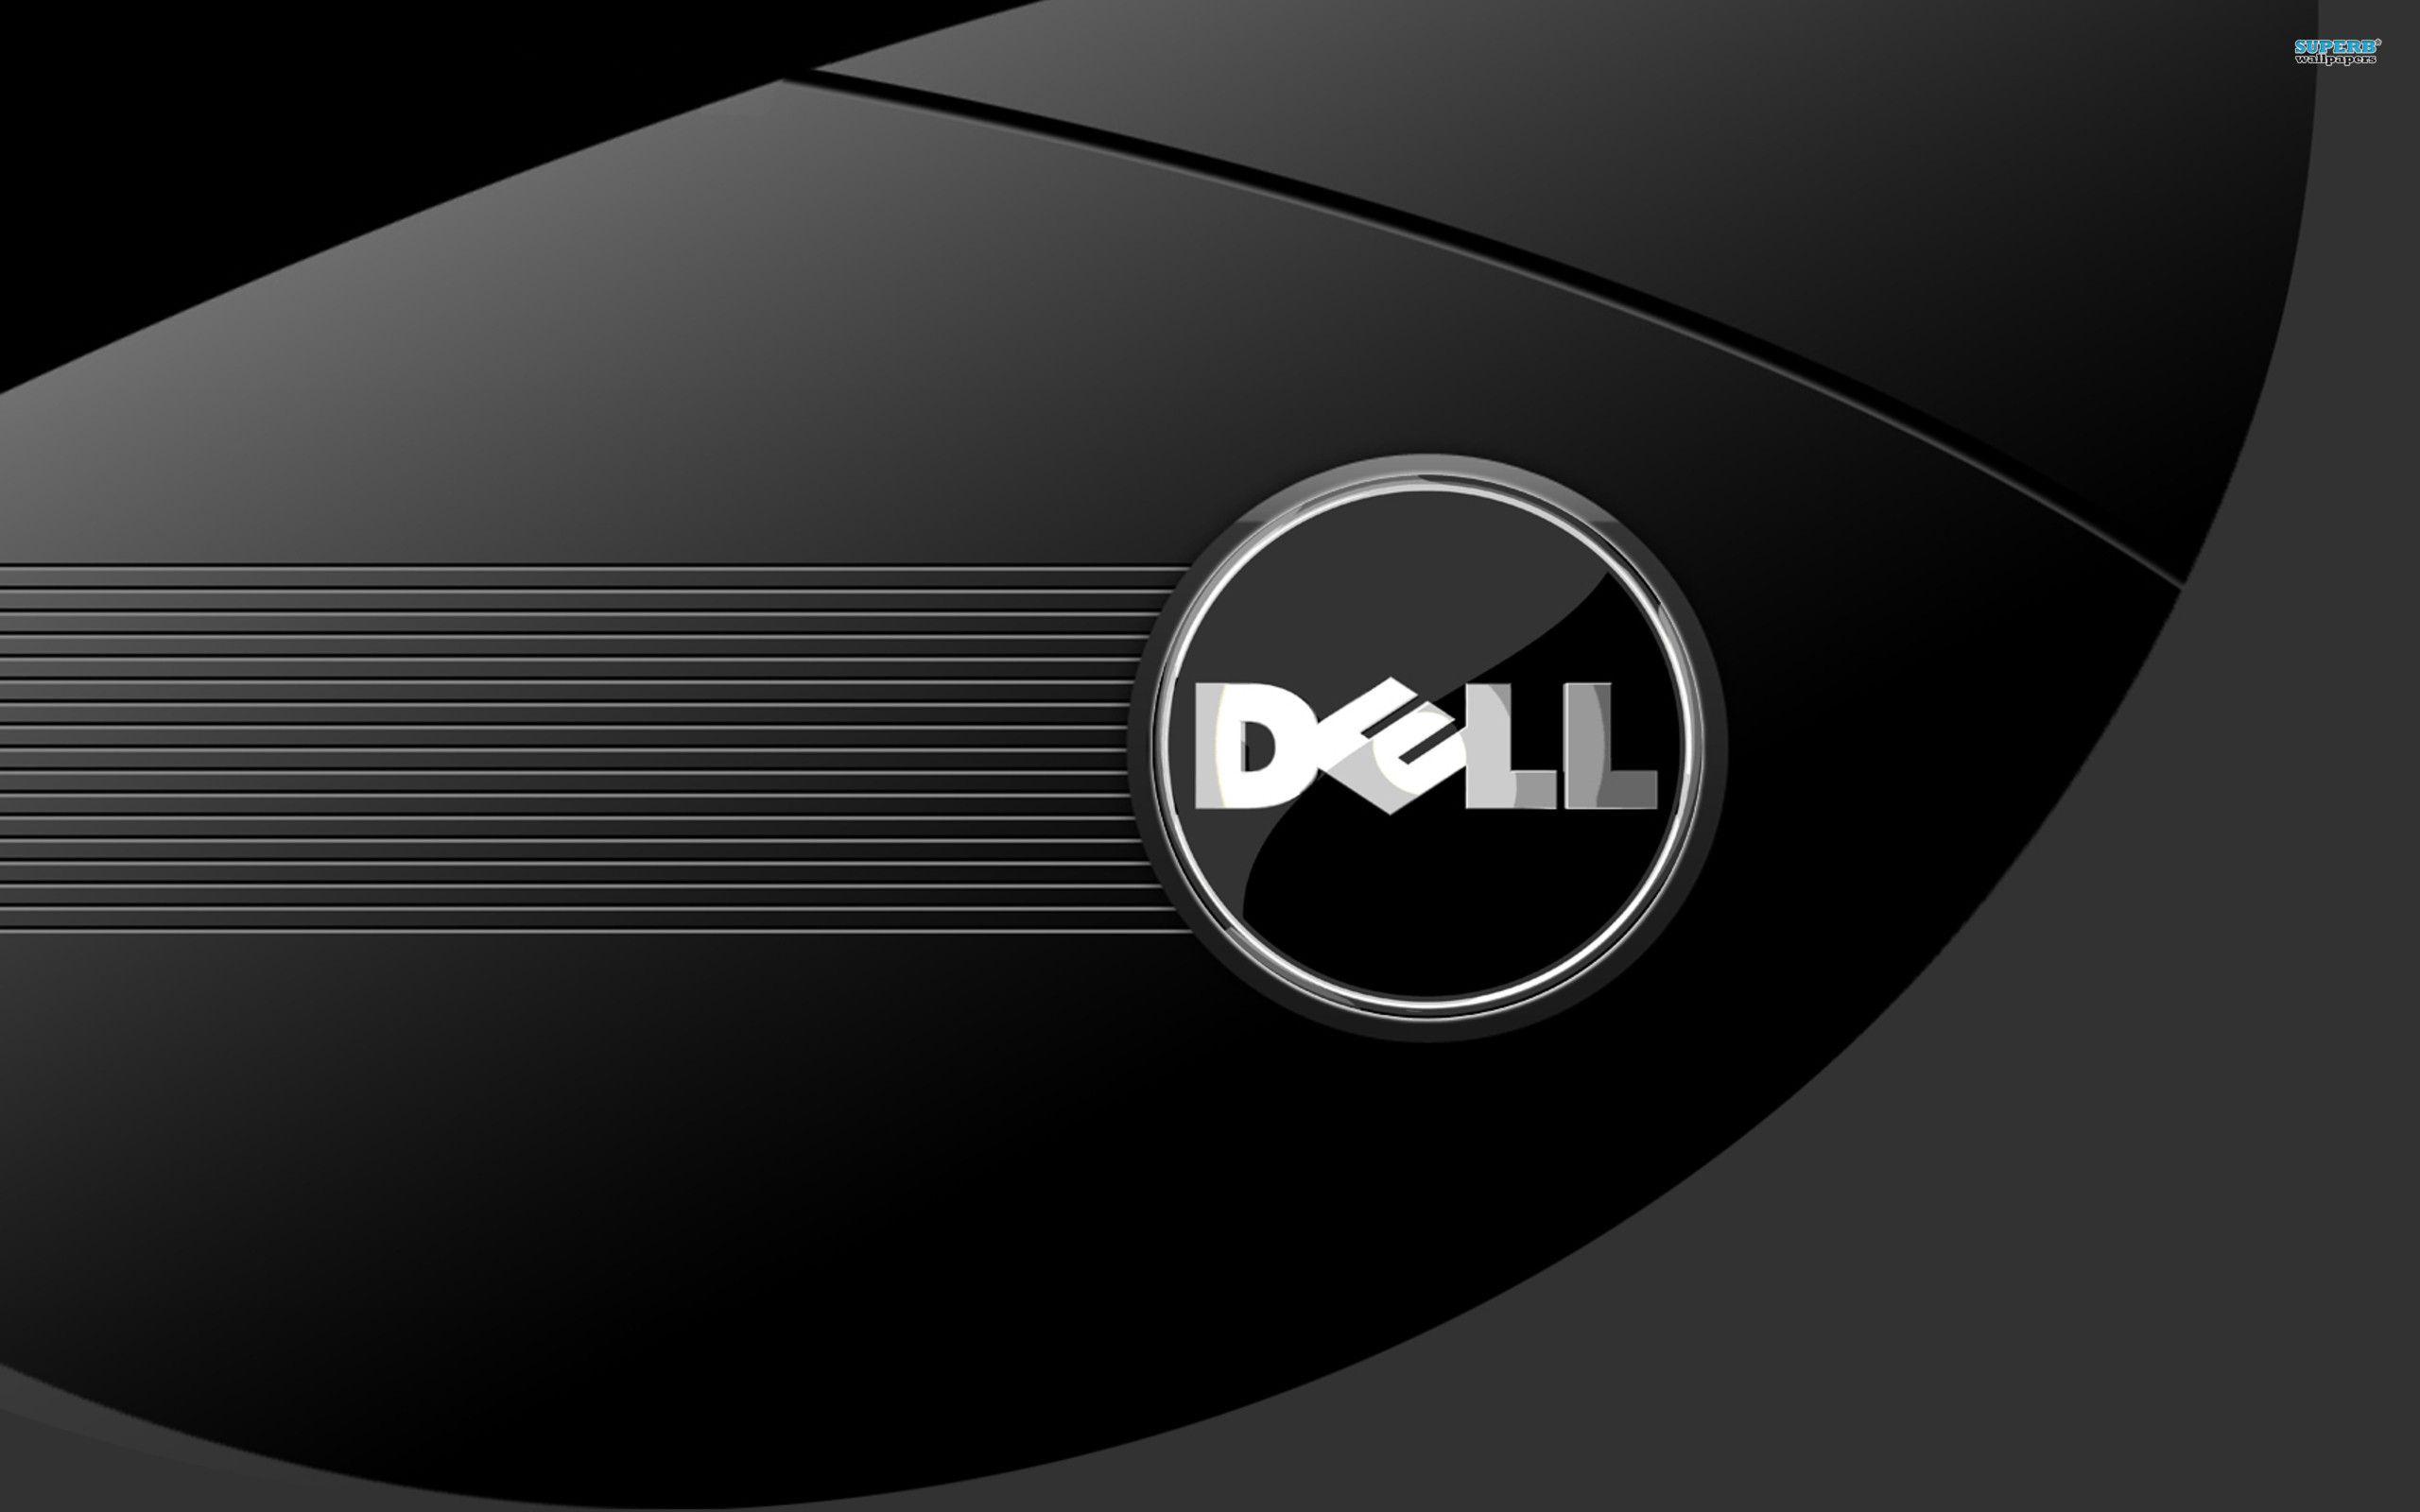 Dell Desktop Wallpapers Top Free Dell Desktop Backgrounds Wallpaperaccess